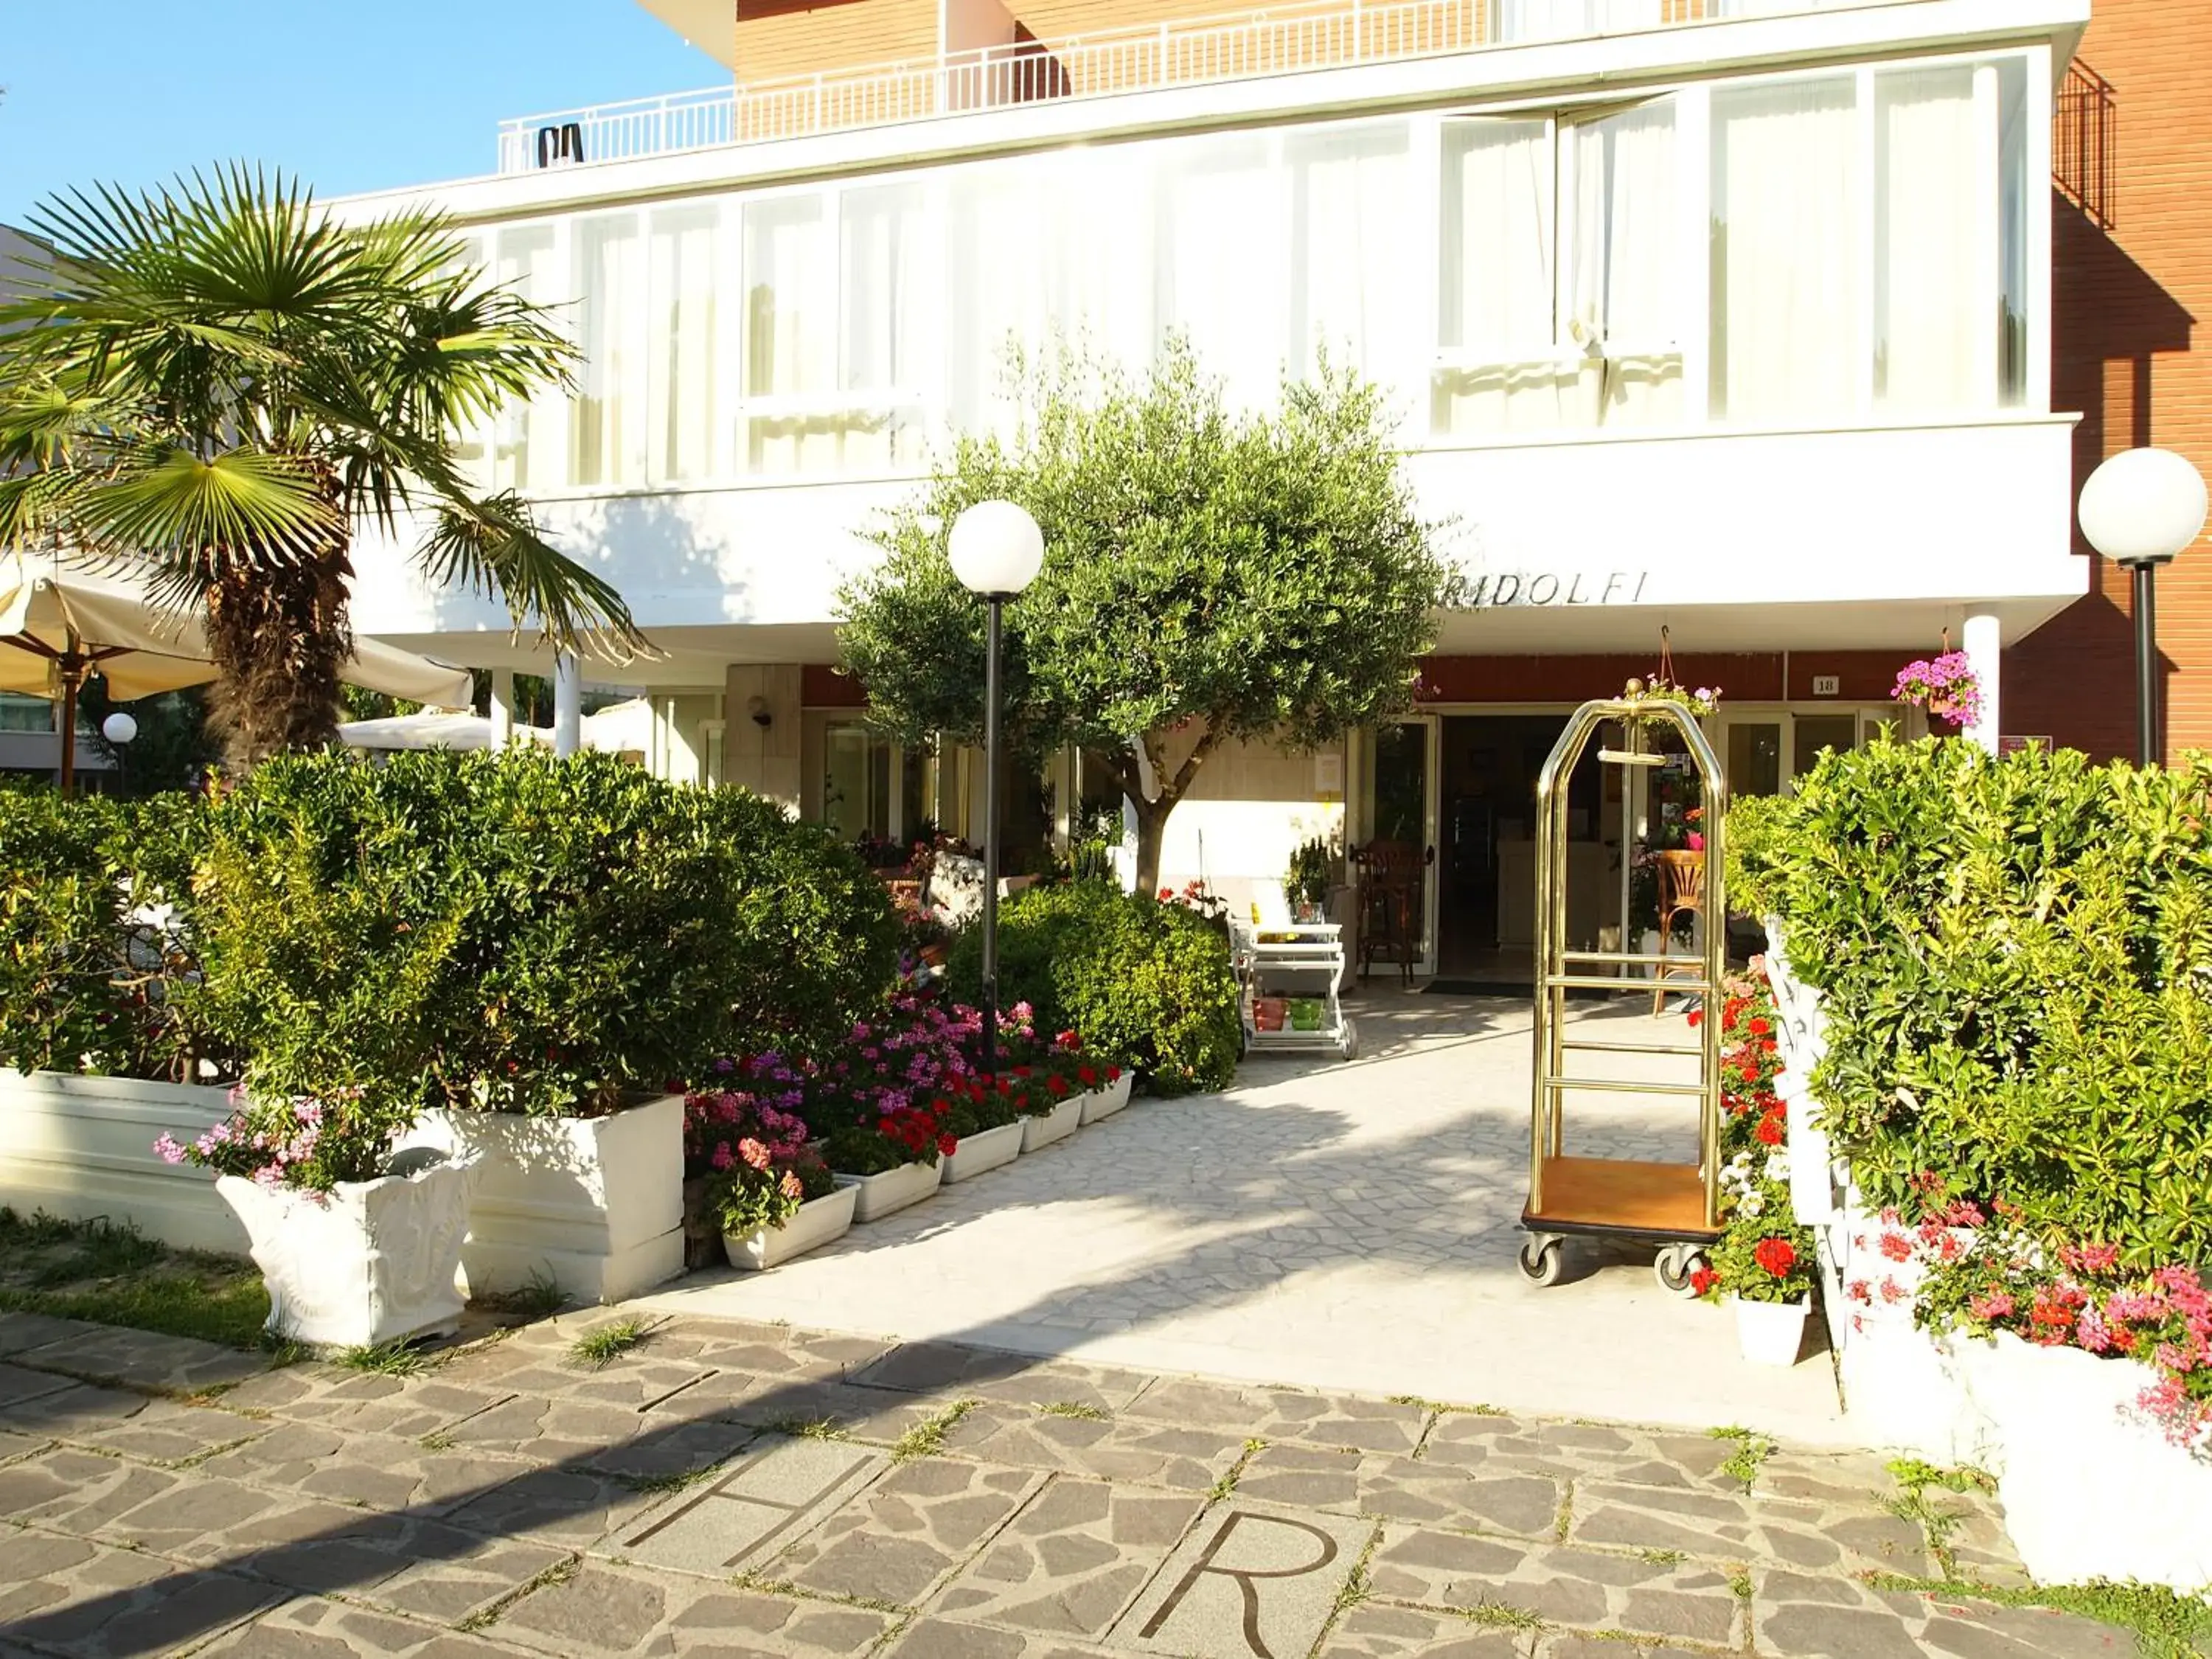 Facade/entrance, Property Building in Hotel Ridolfi